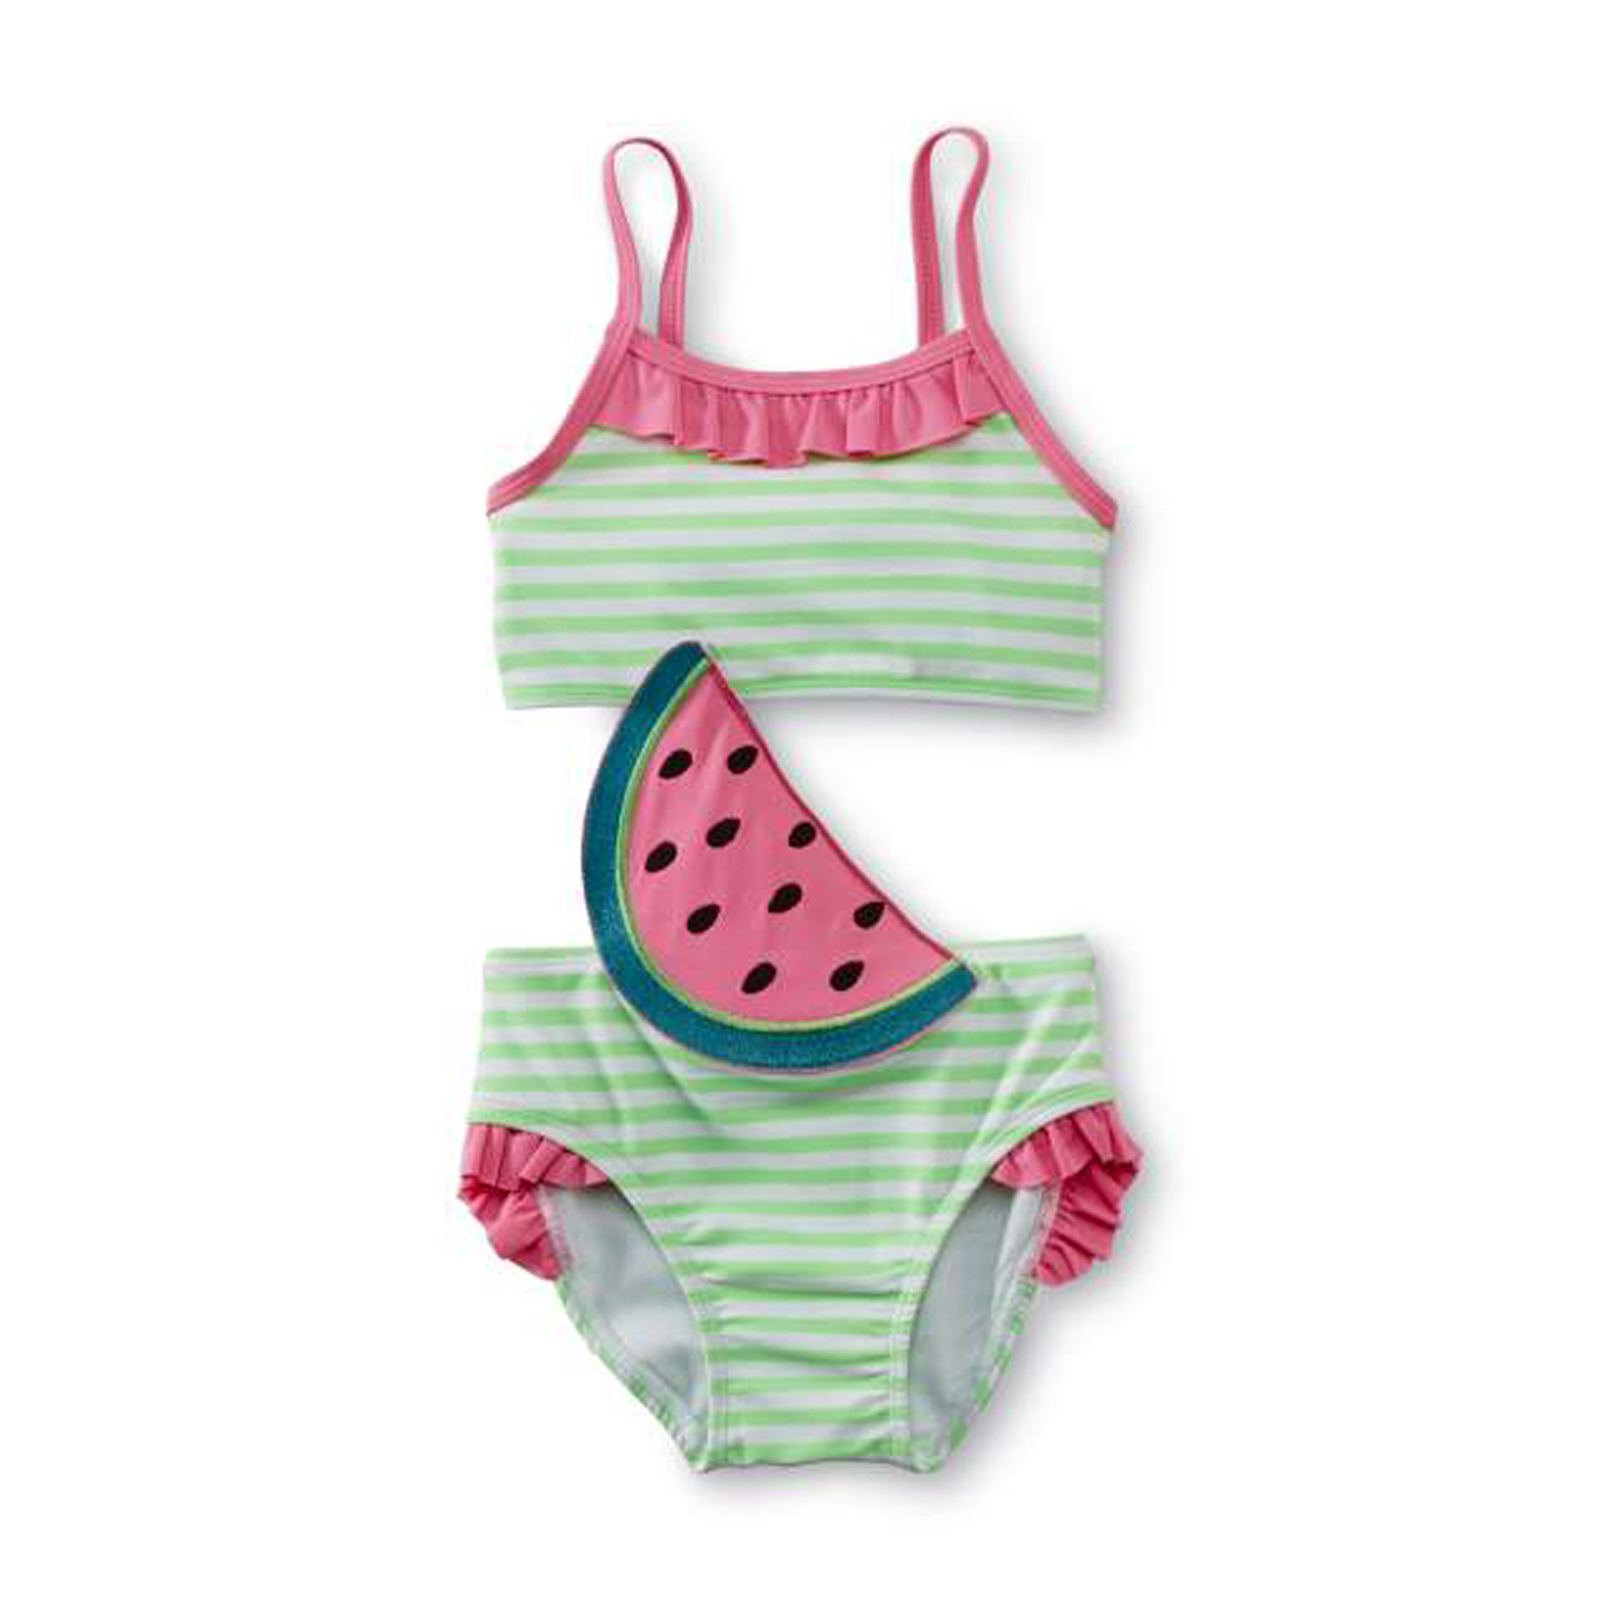 WonderKids Infant & Toddler Girl's Watermelon Monokini Swimsuit - Striped